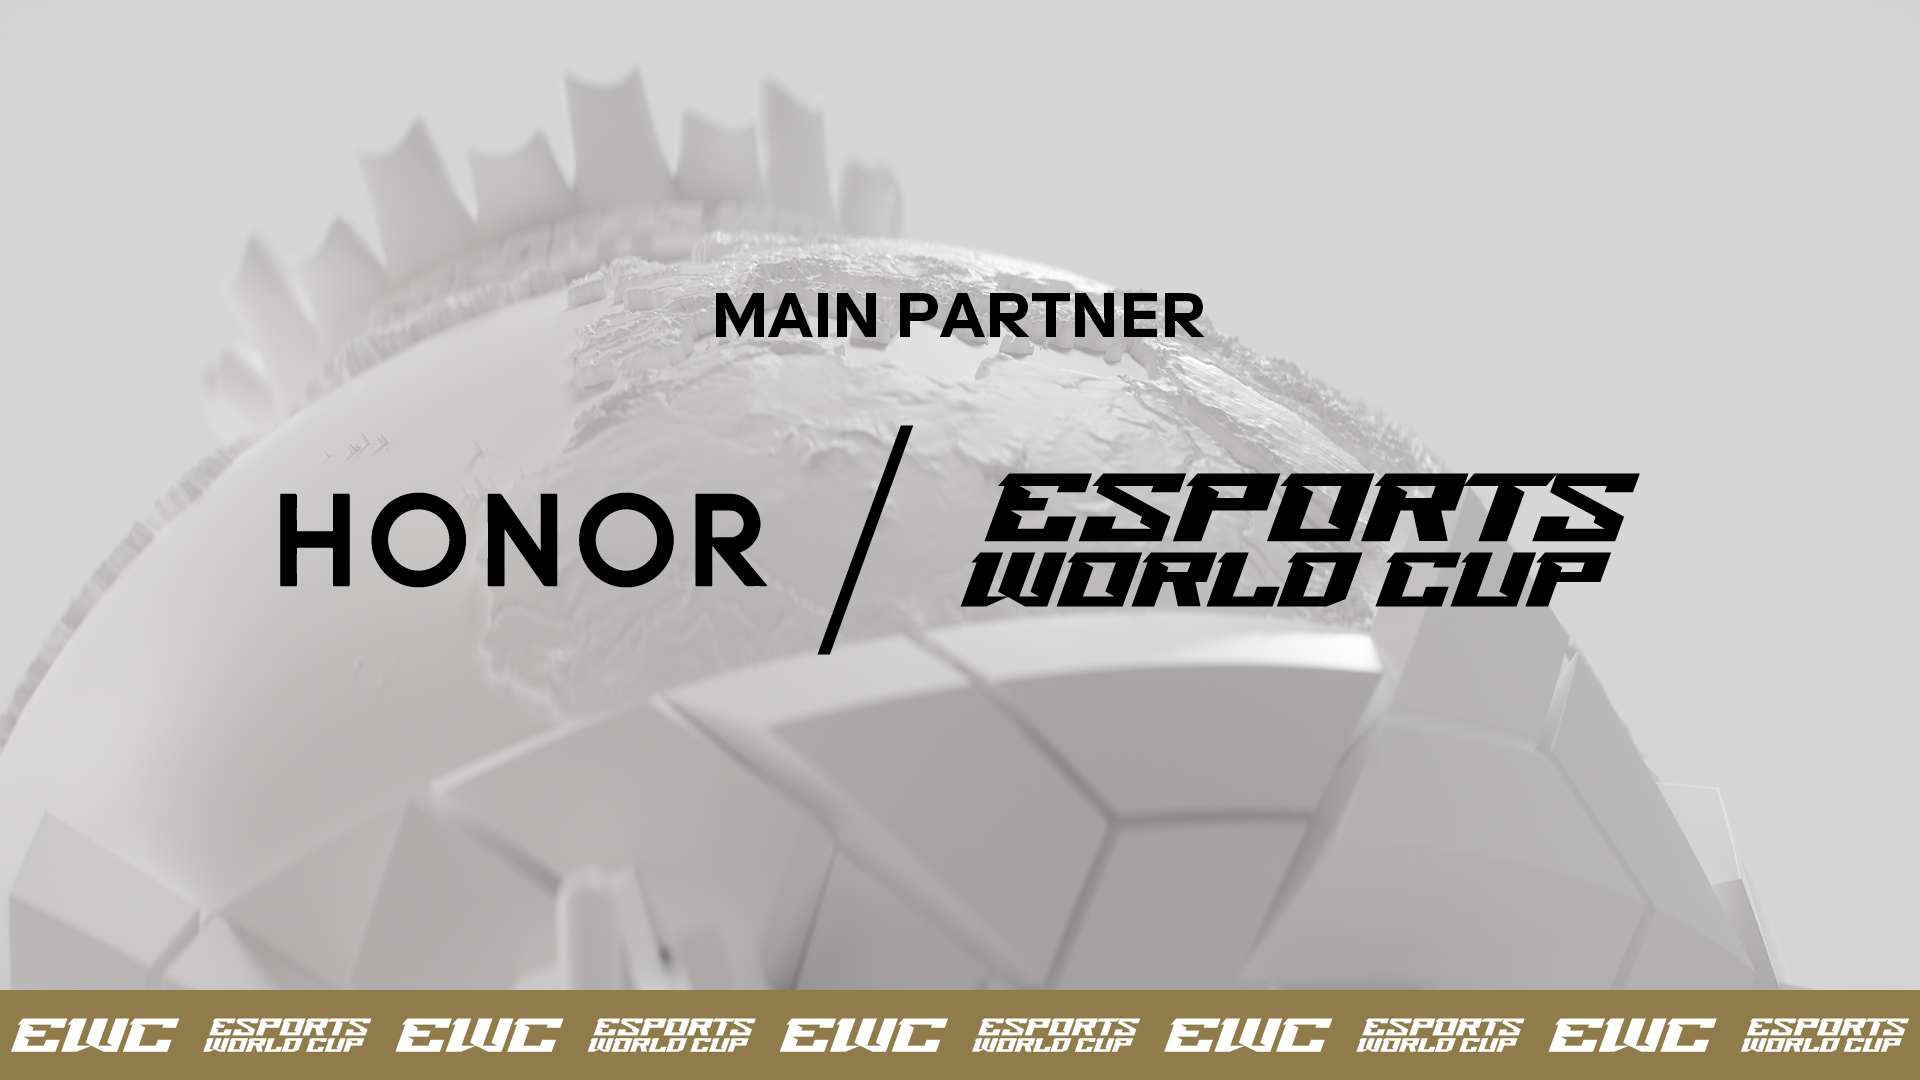 honor esports partnership